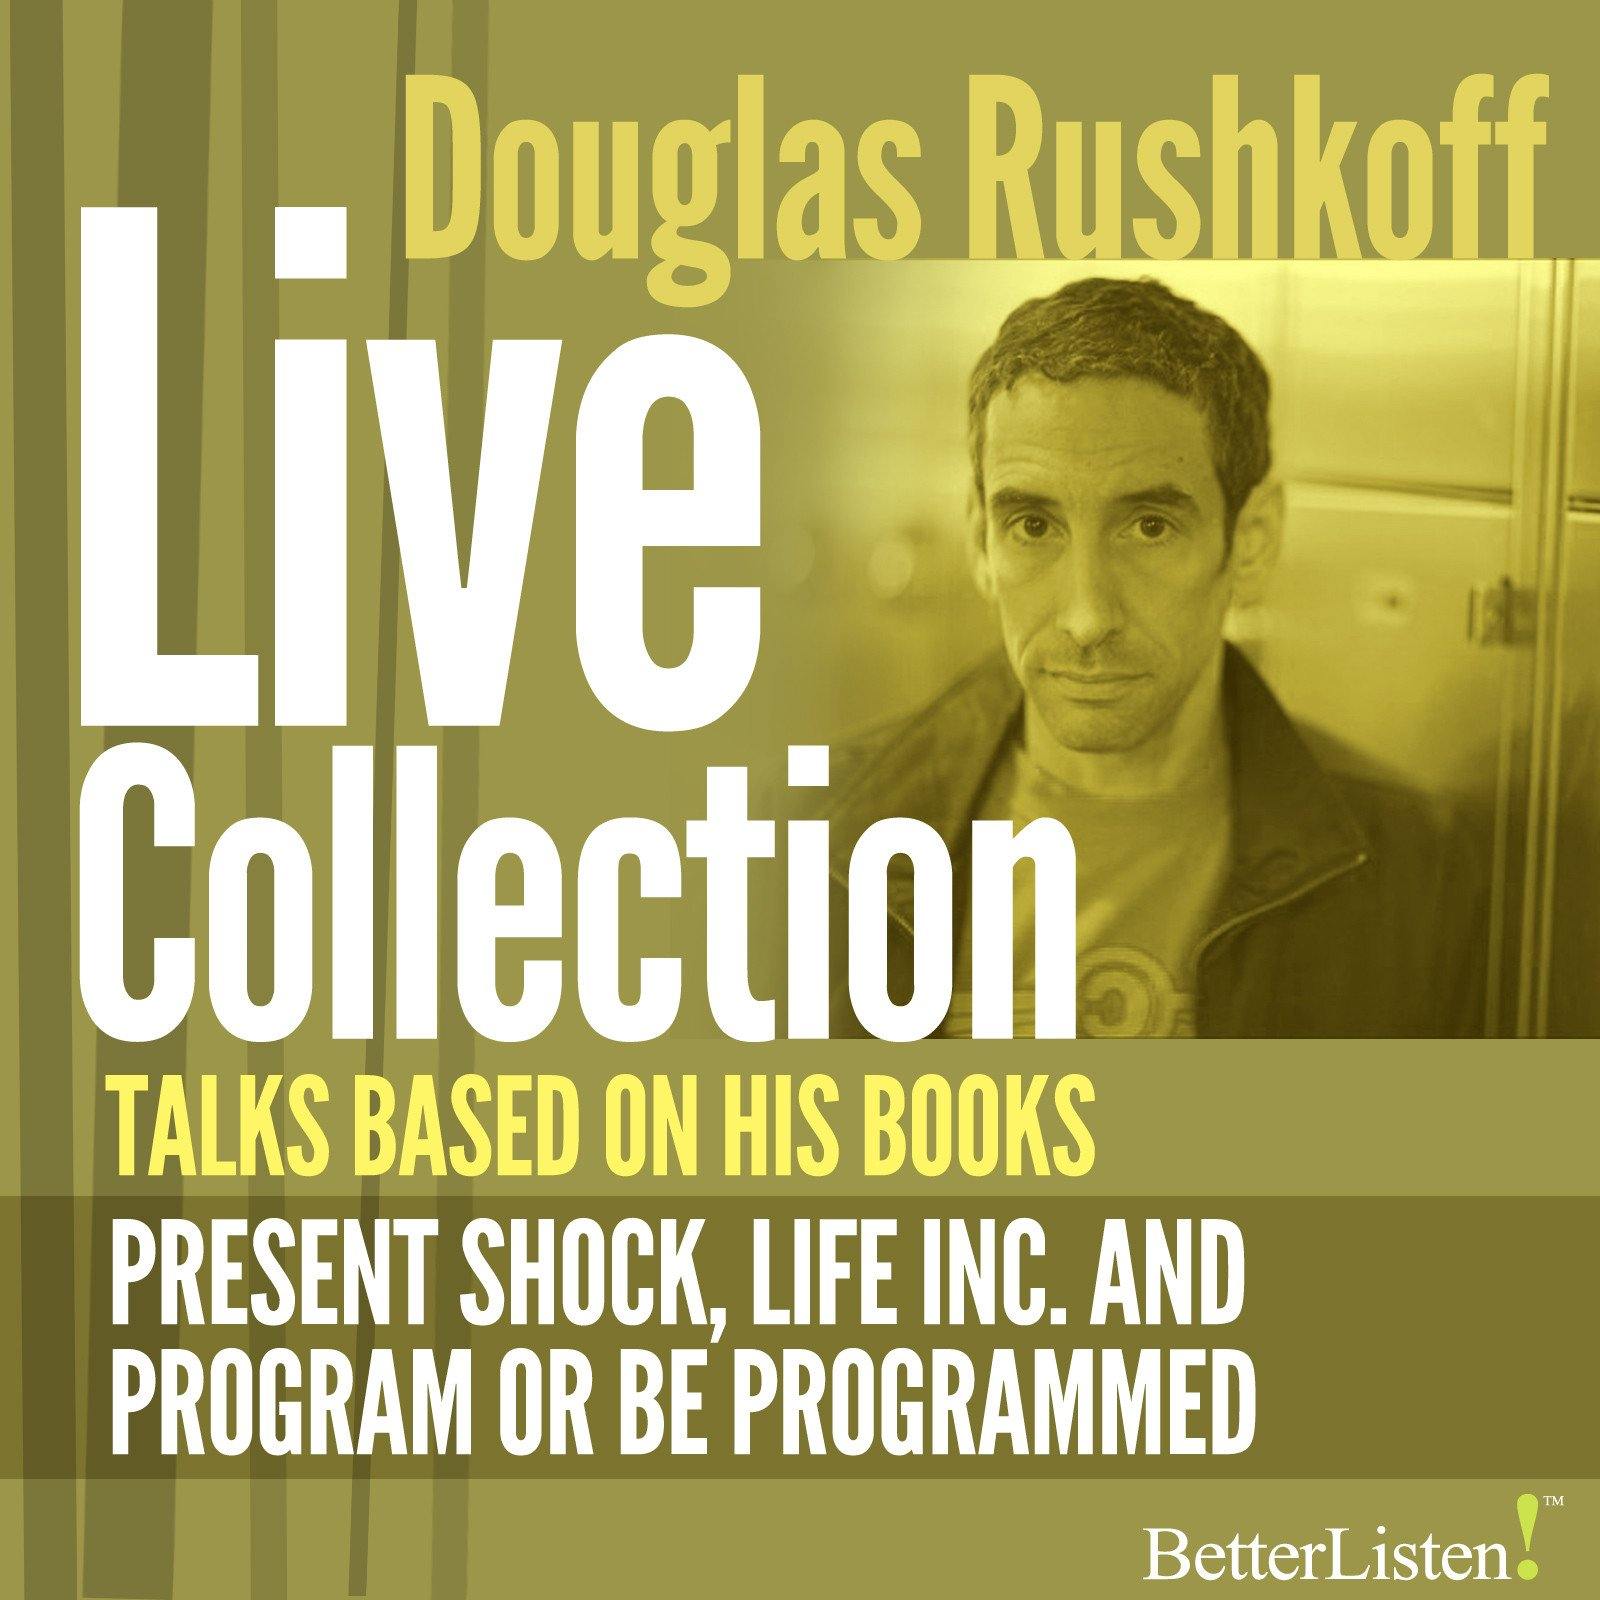 Rushkoff Live Collection: Talks Based on His Books Audio Program BetterListen! - BetterListen!